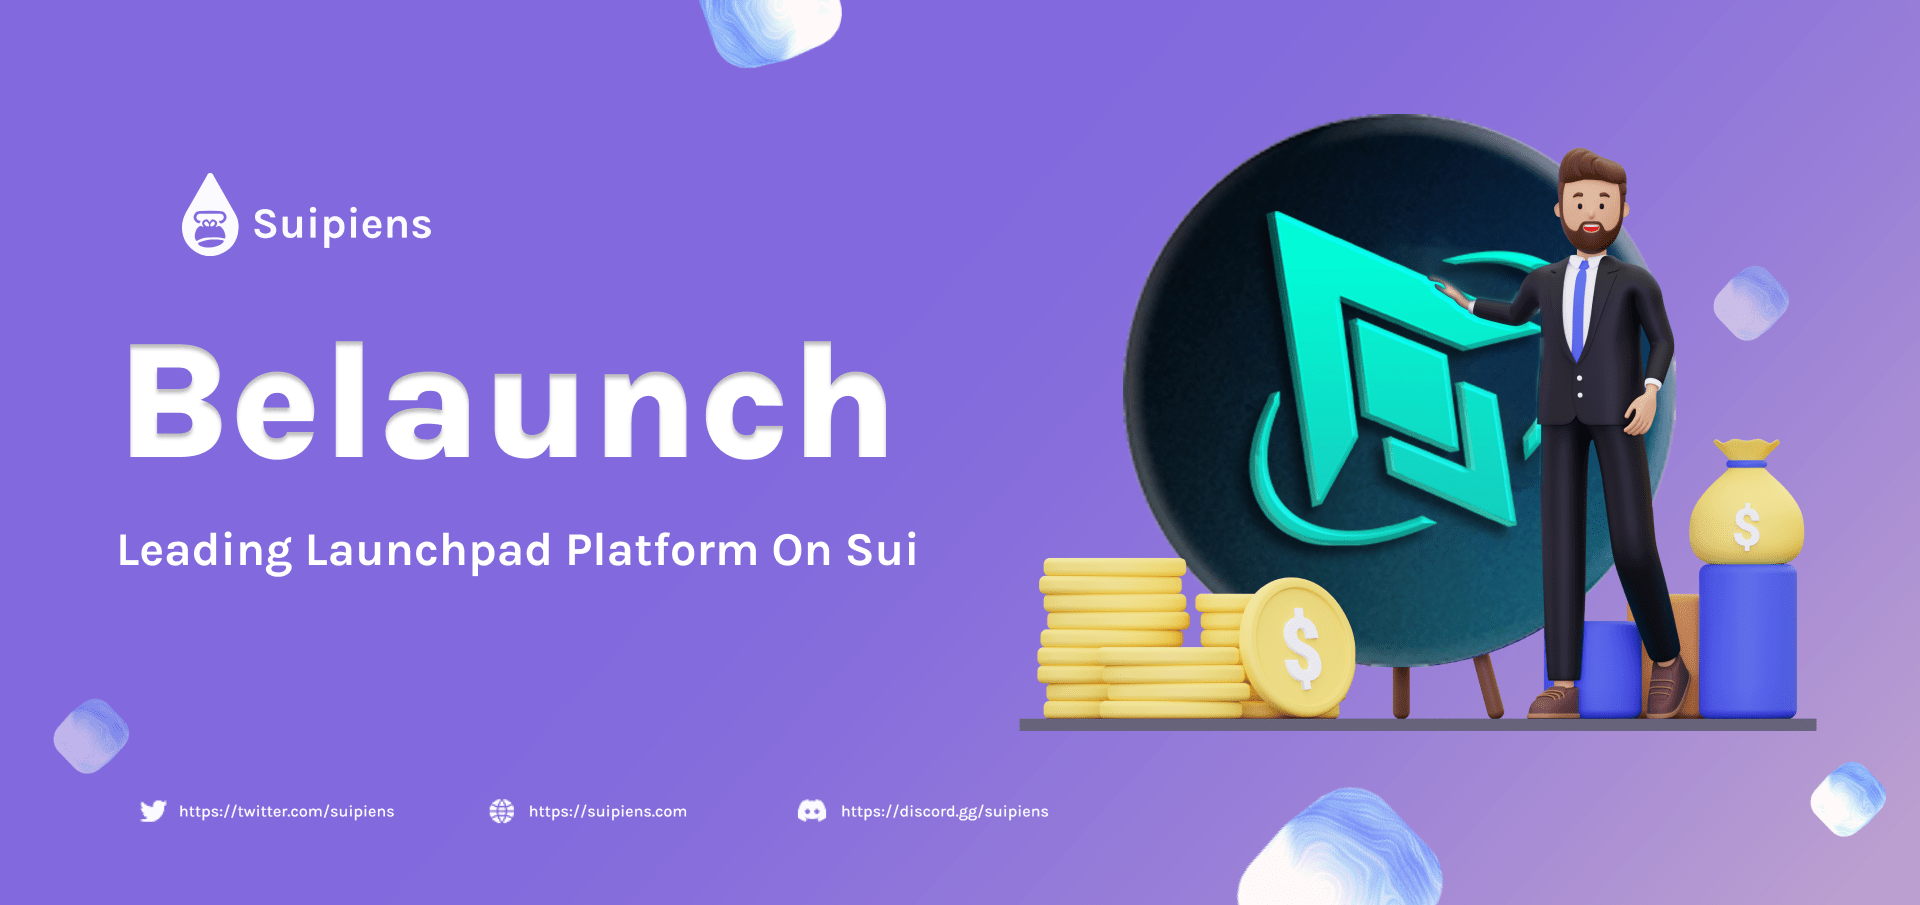 BeLaunch - Leading launchpad platform on Sui